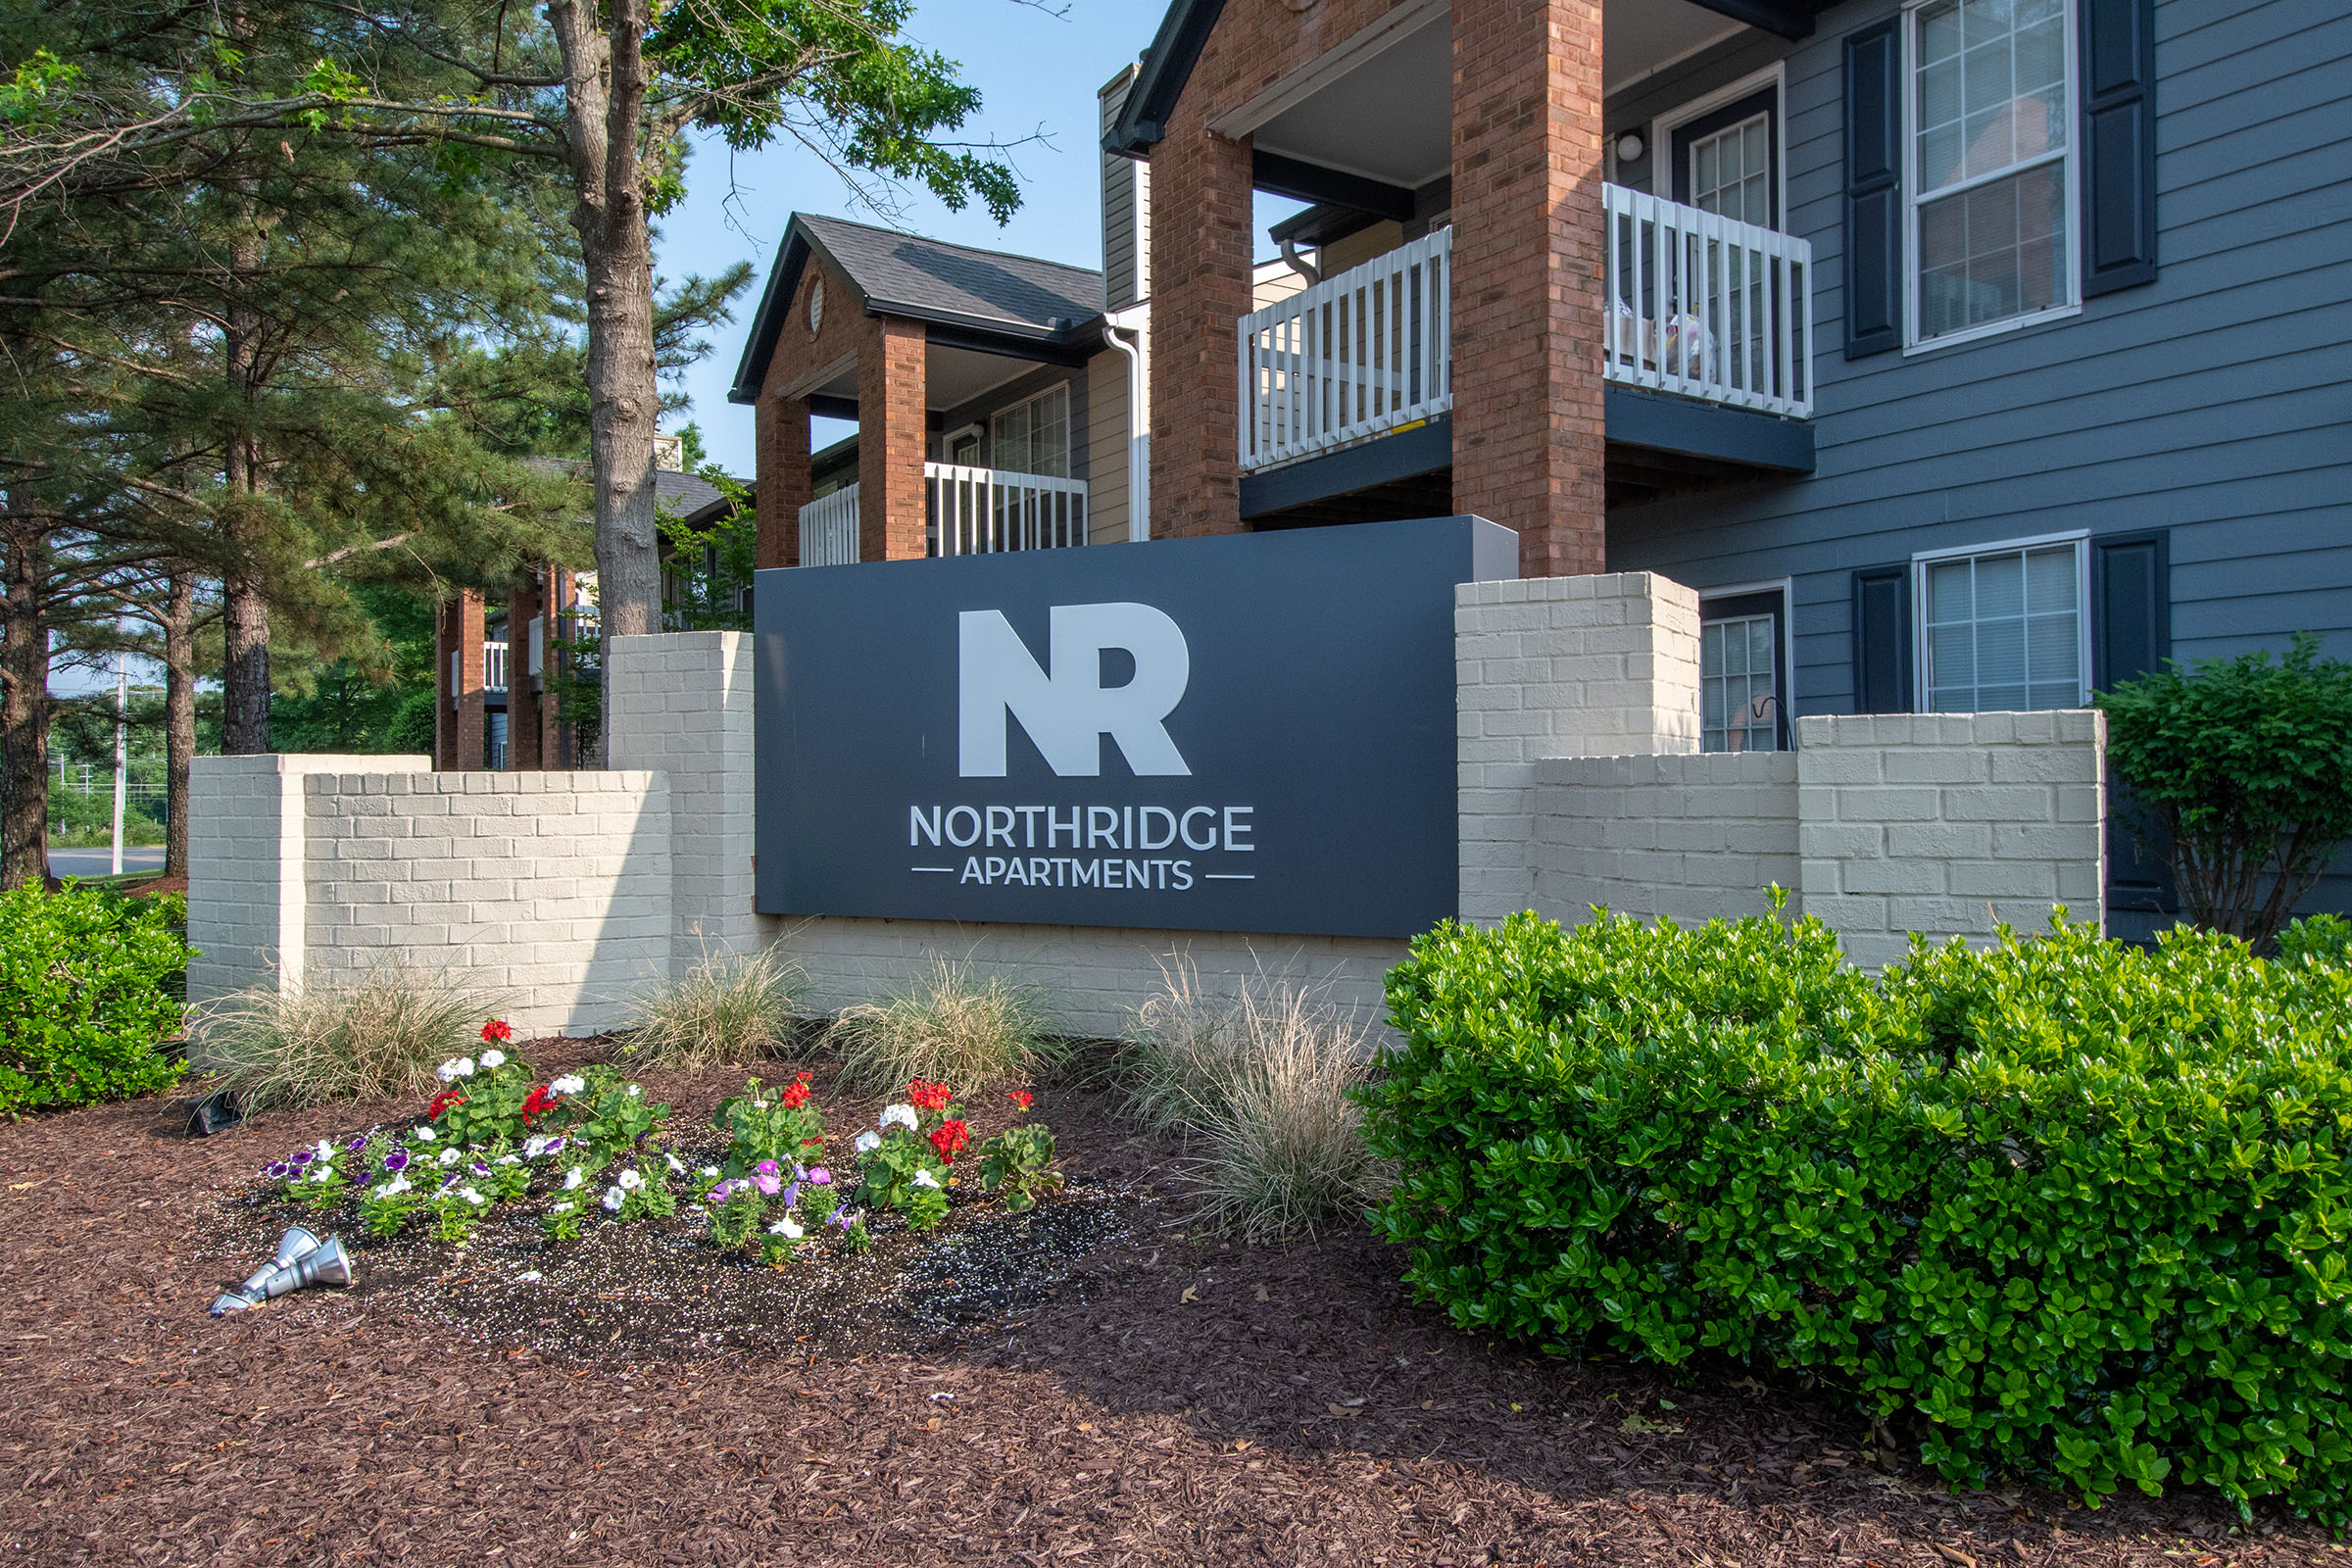 Northridge Apartments in Jackson, Tennessee